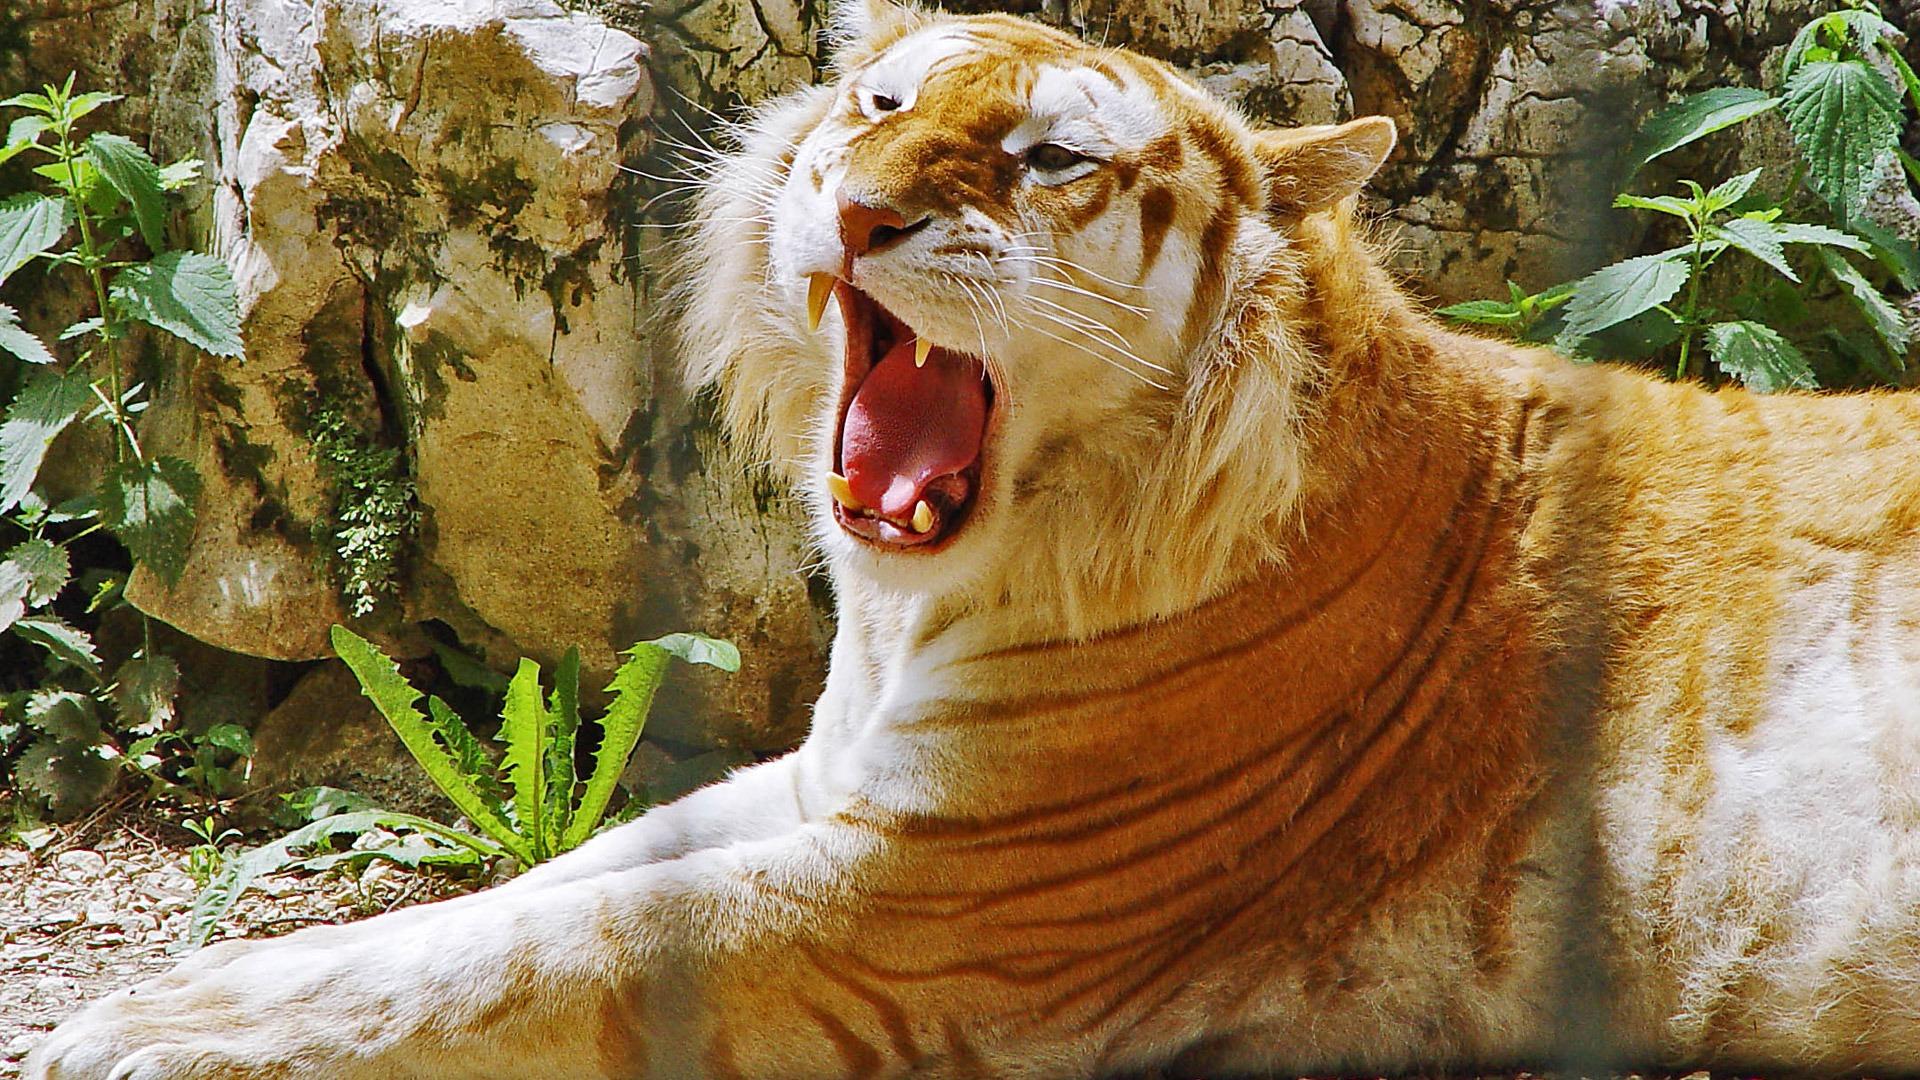 Golden Tiger Wallpaper Tigers Animals Wallpaper in jpg format for free download